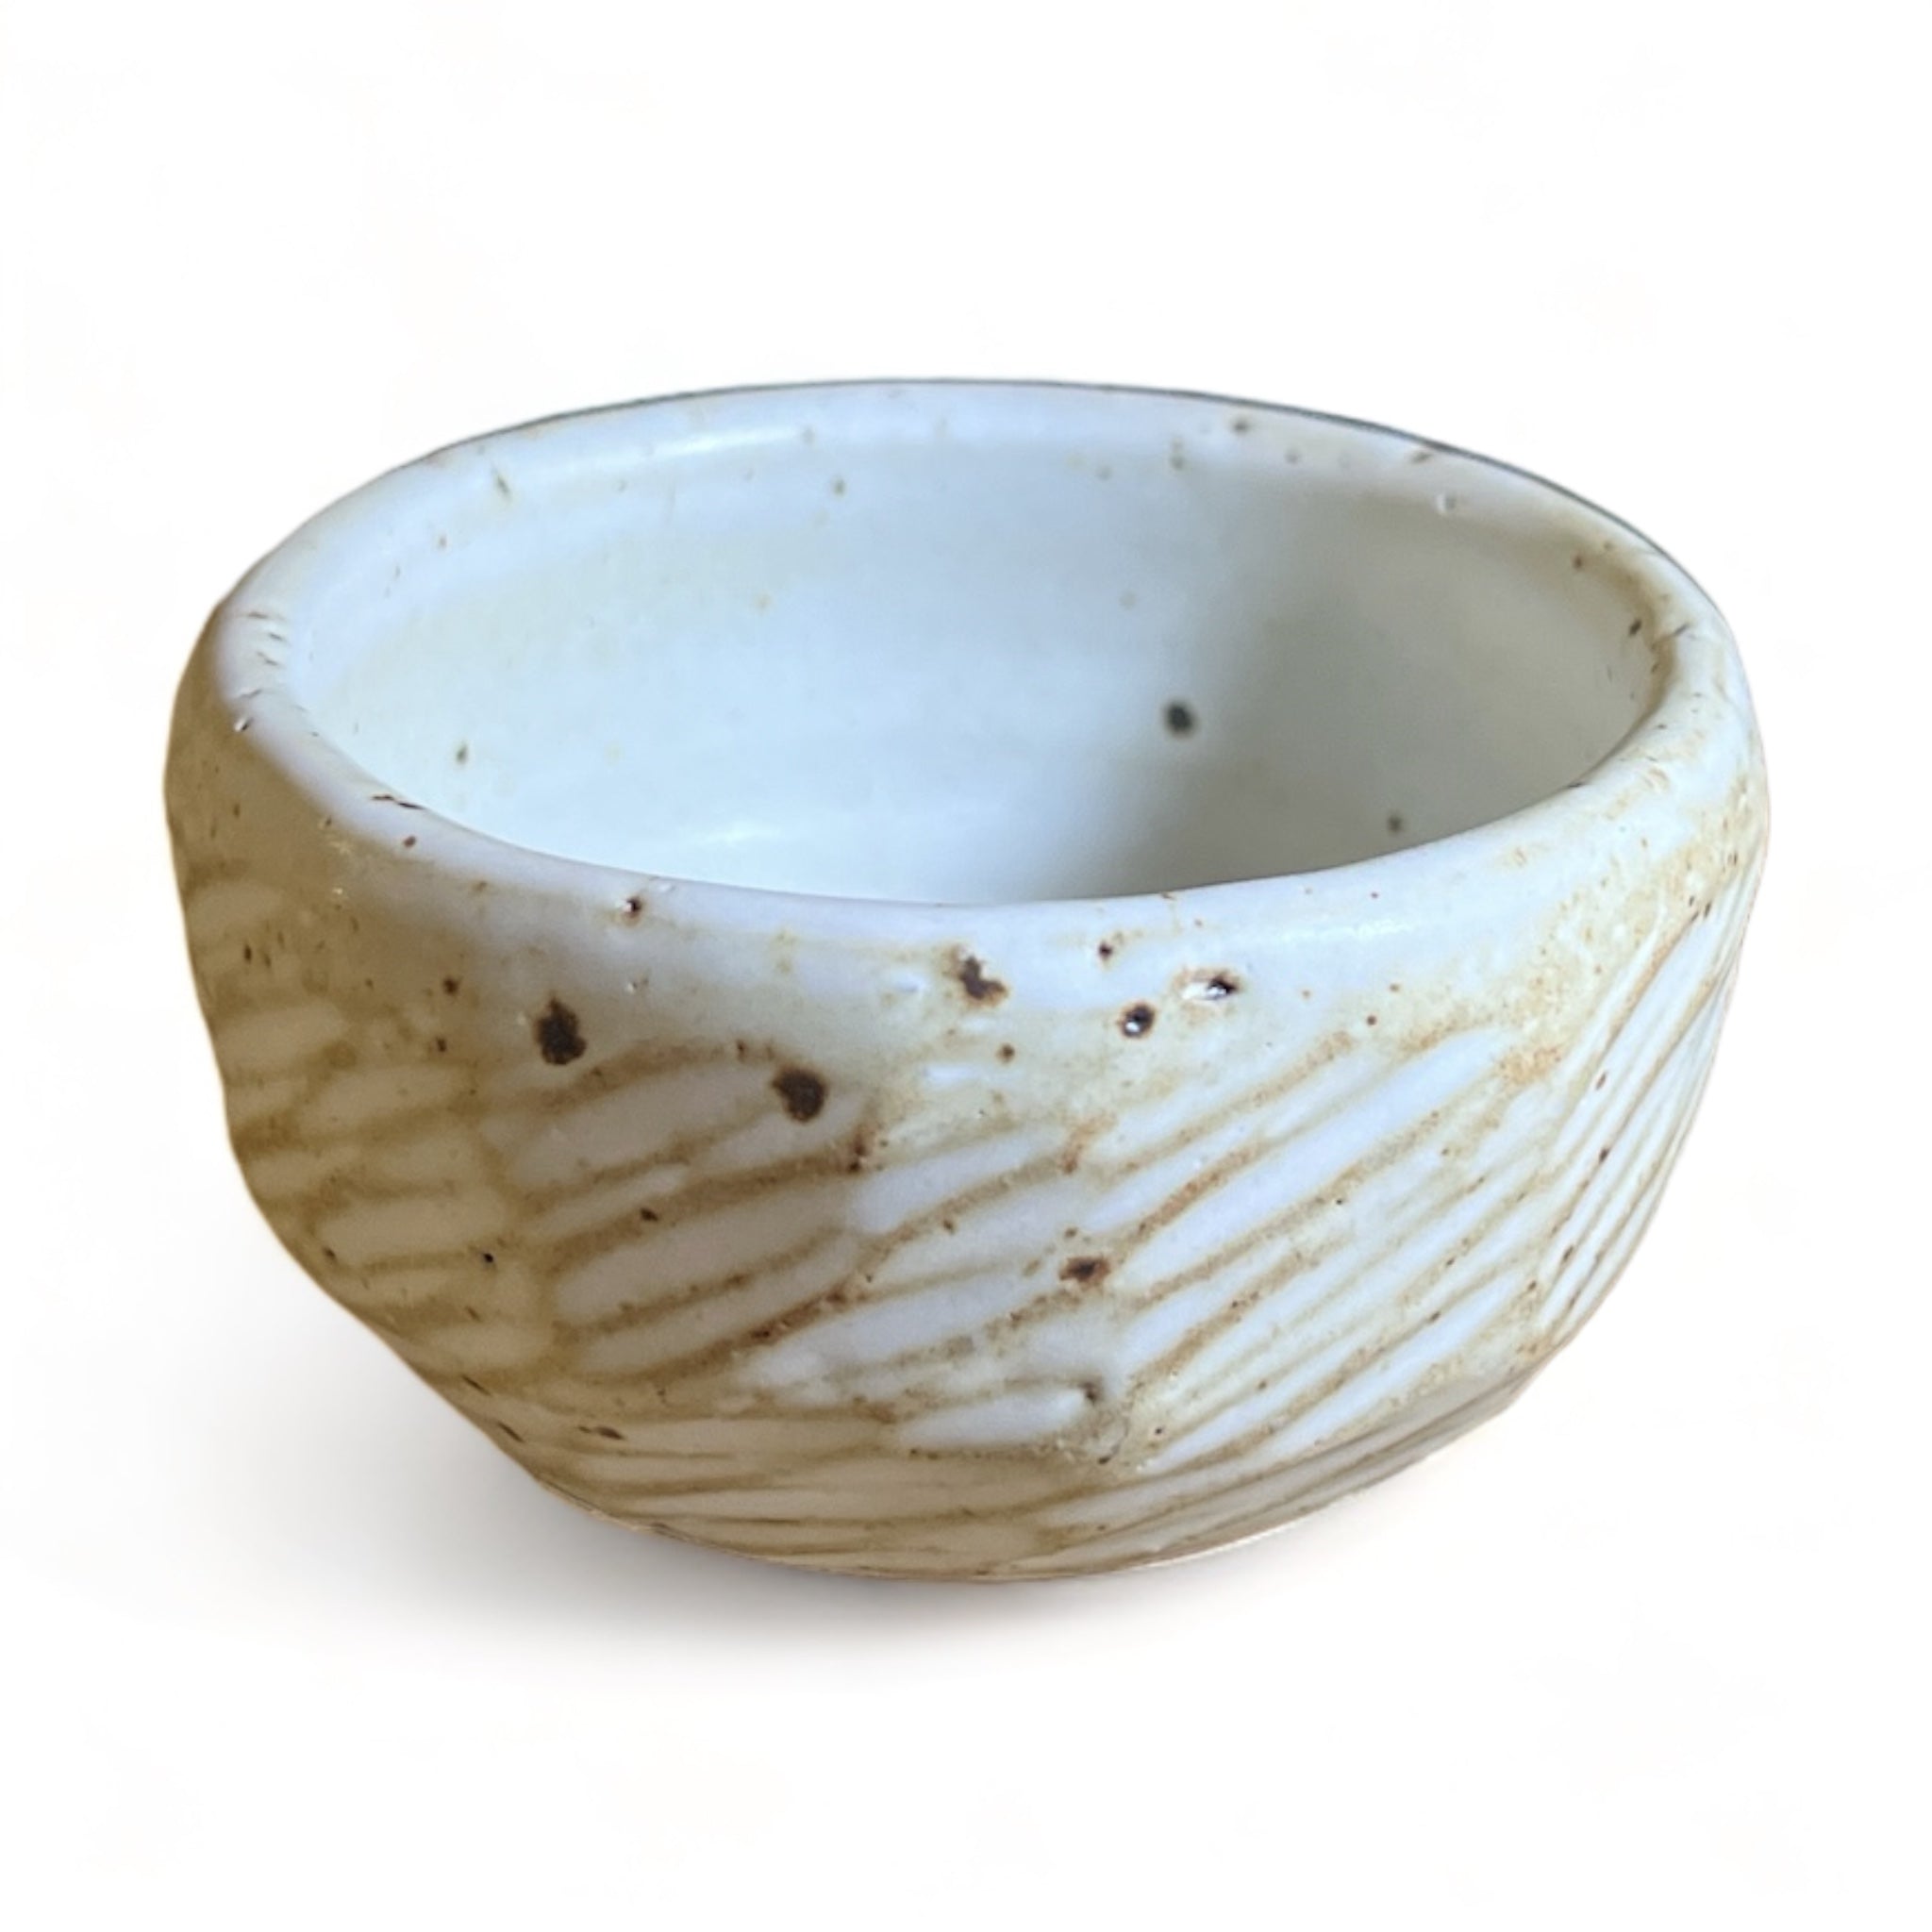 Taiwanese Handmade Wood-Fired Ceramic Teacup - Sand Garden